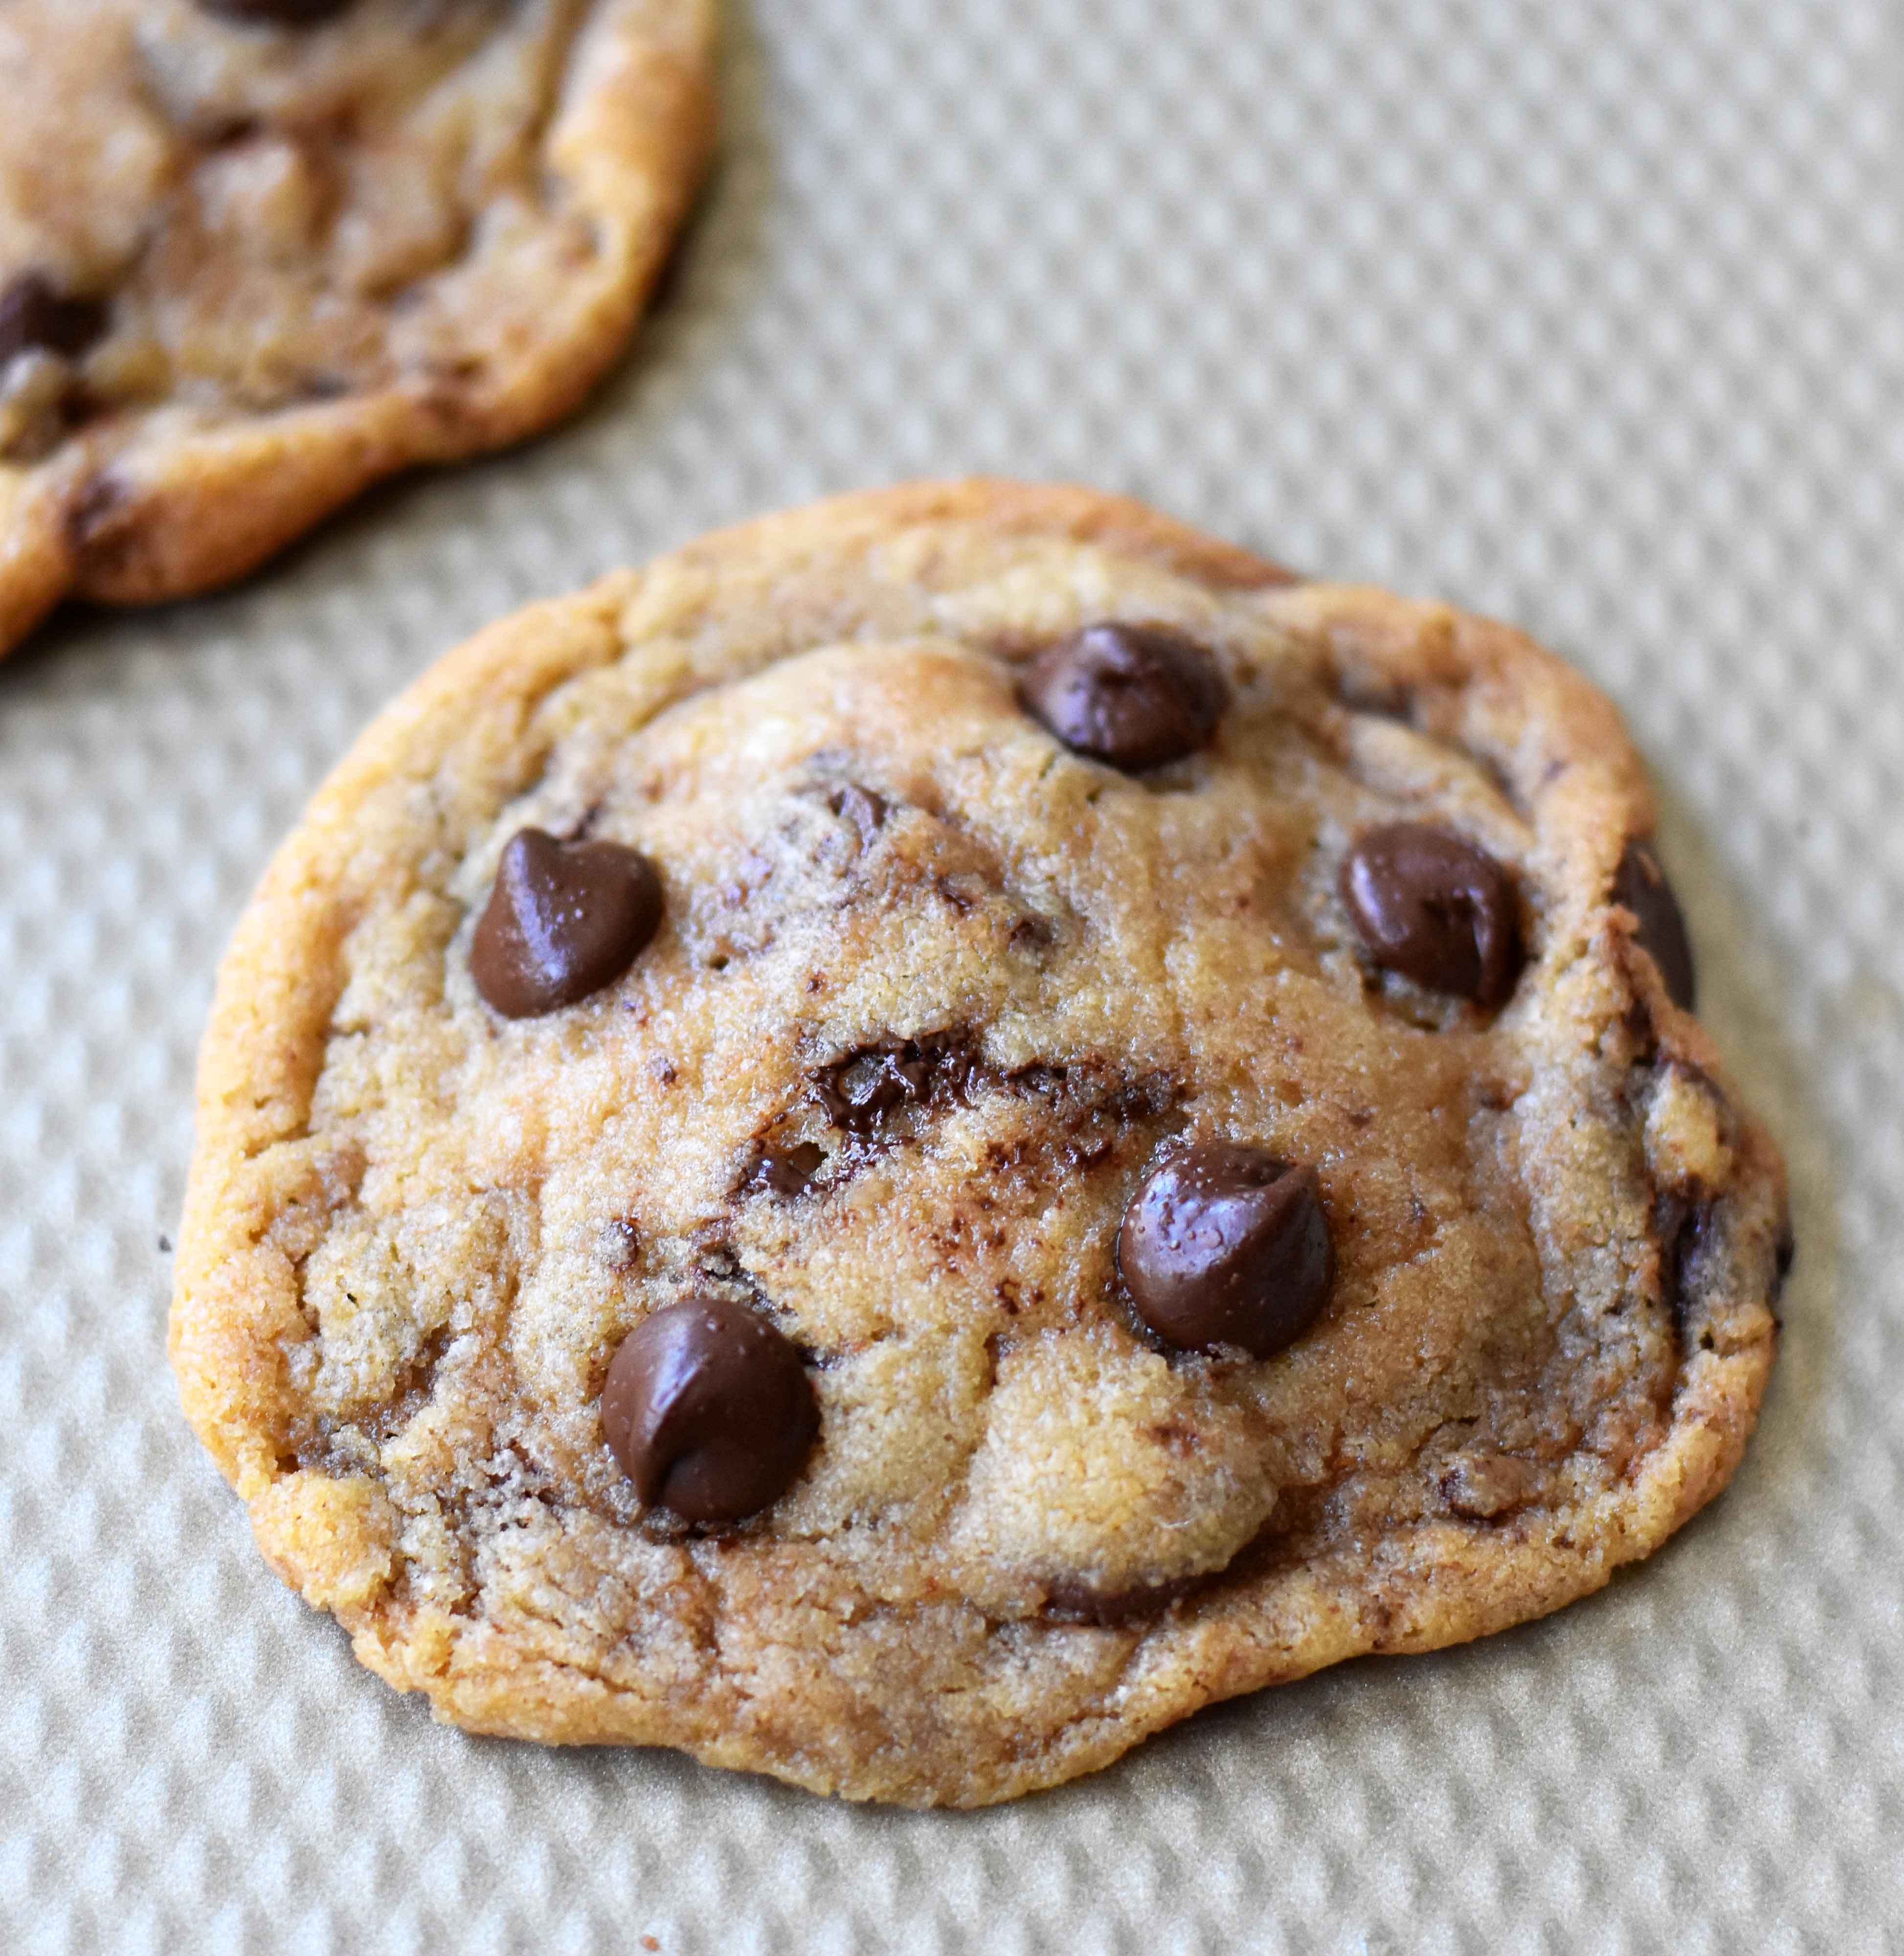 https://www.modernhoney.com/wp-content/uploads/2017/11/Thin-and-Crispy-Chocolate-Chip-Cookies-9.jpg